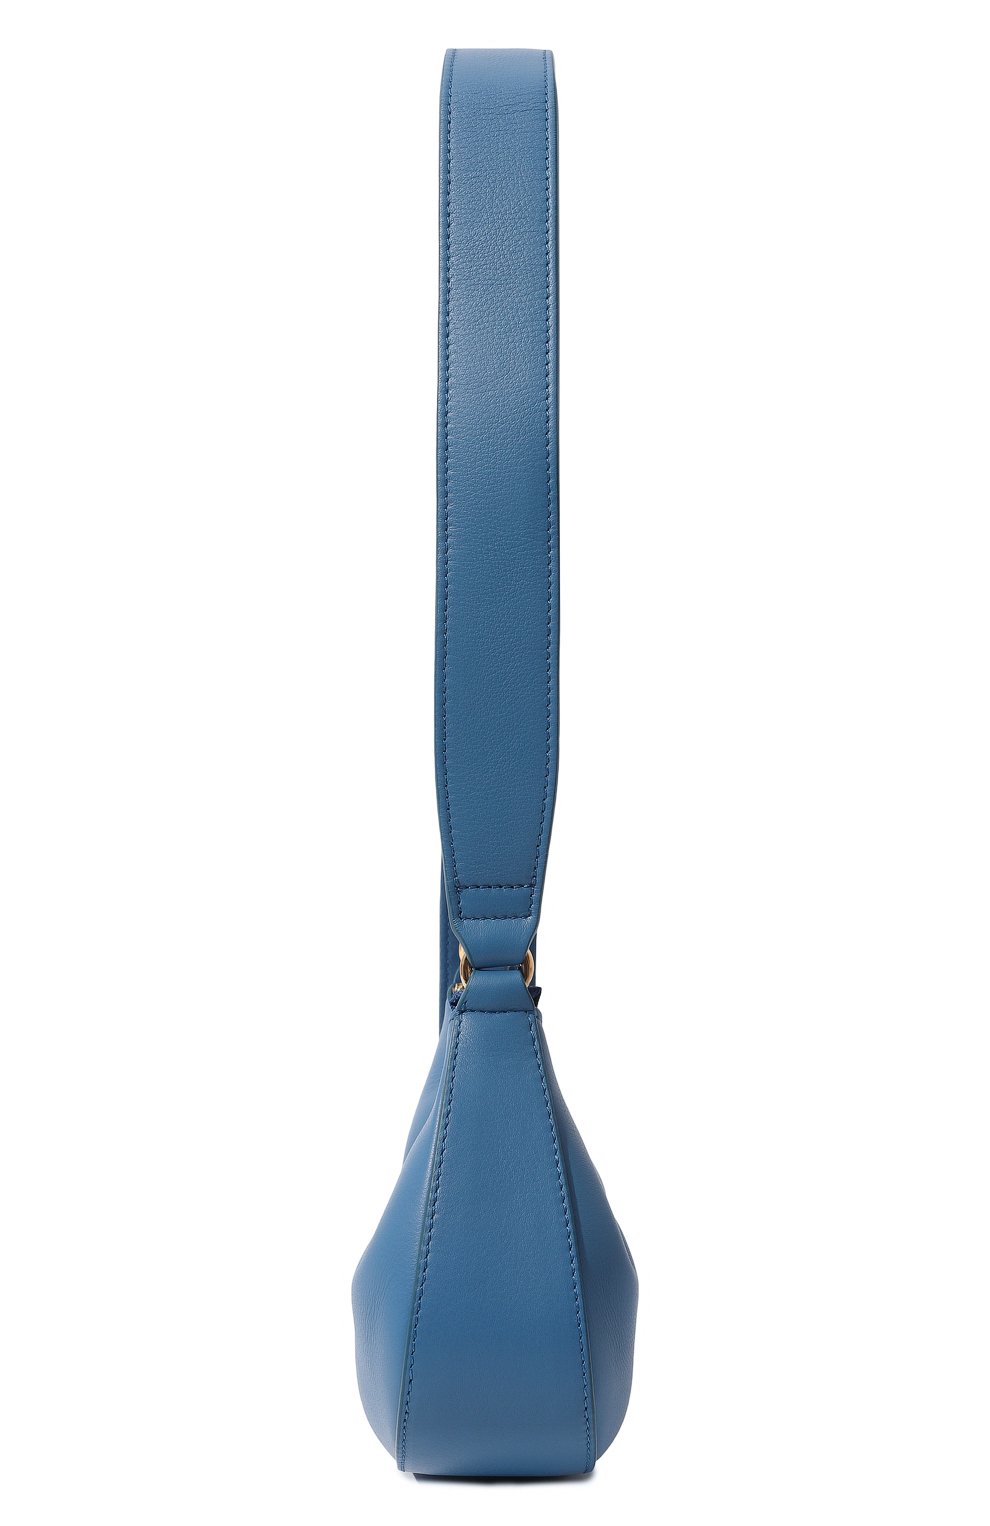 Женская сумка dimple moon small ELLEME голубого цвета, арт. DIMPLE M00N SMALL/LEATHER | Фото 4 (Сумки-технические: Сумки top-handle; Материал: Натуральная кожа; Размер: small)